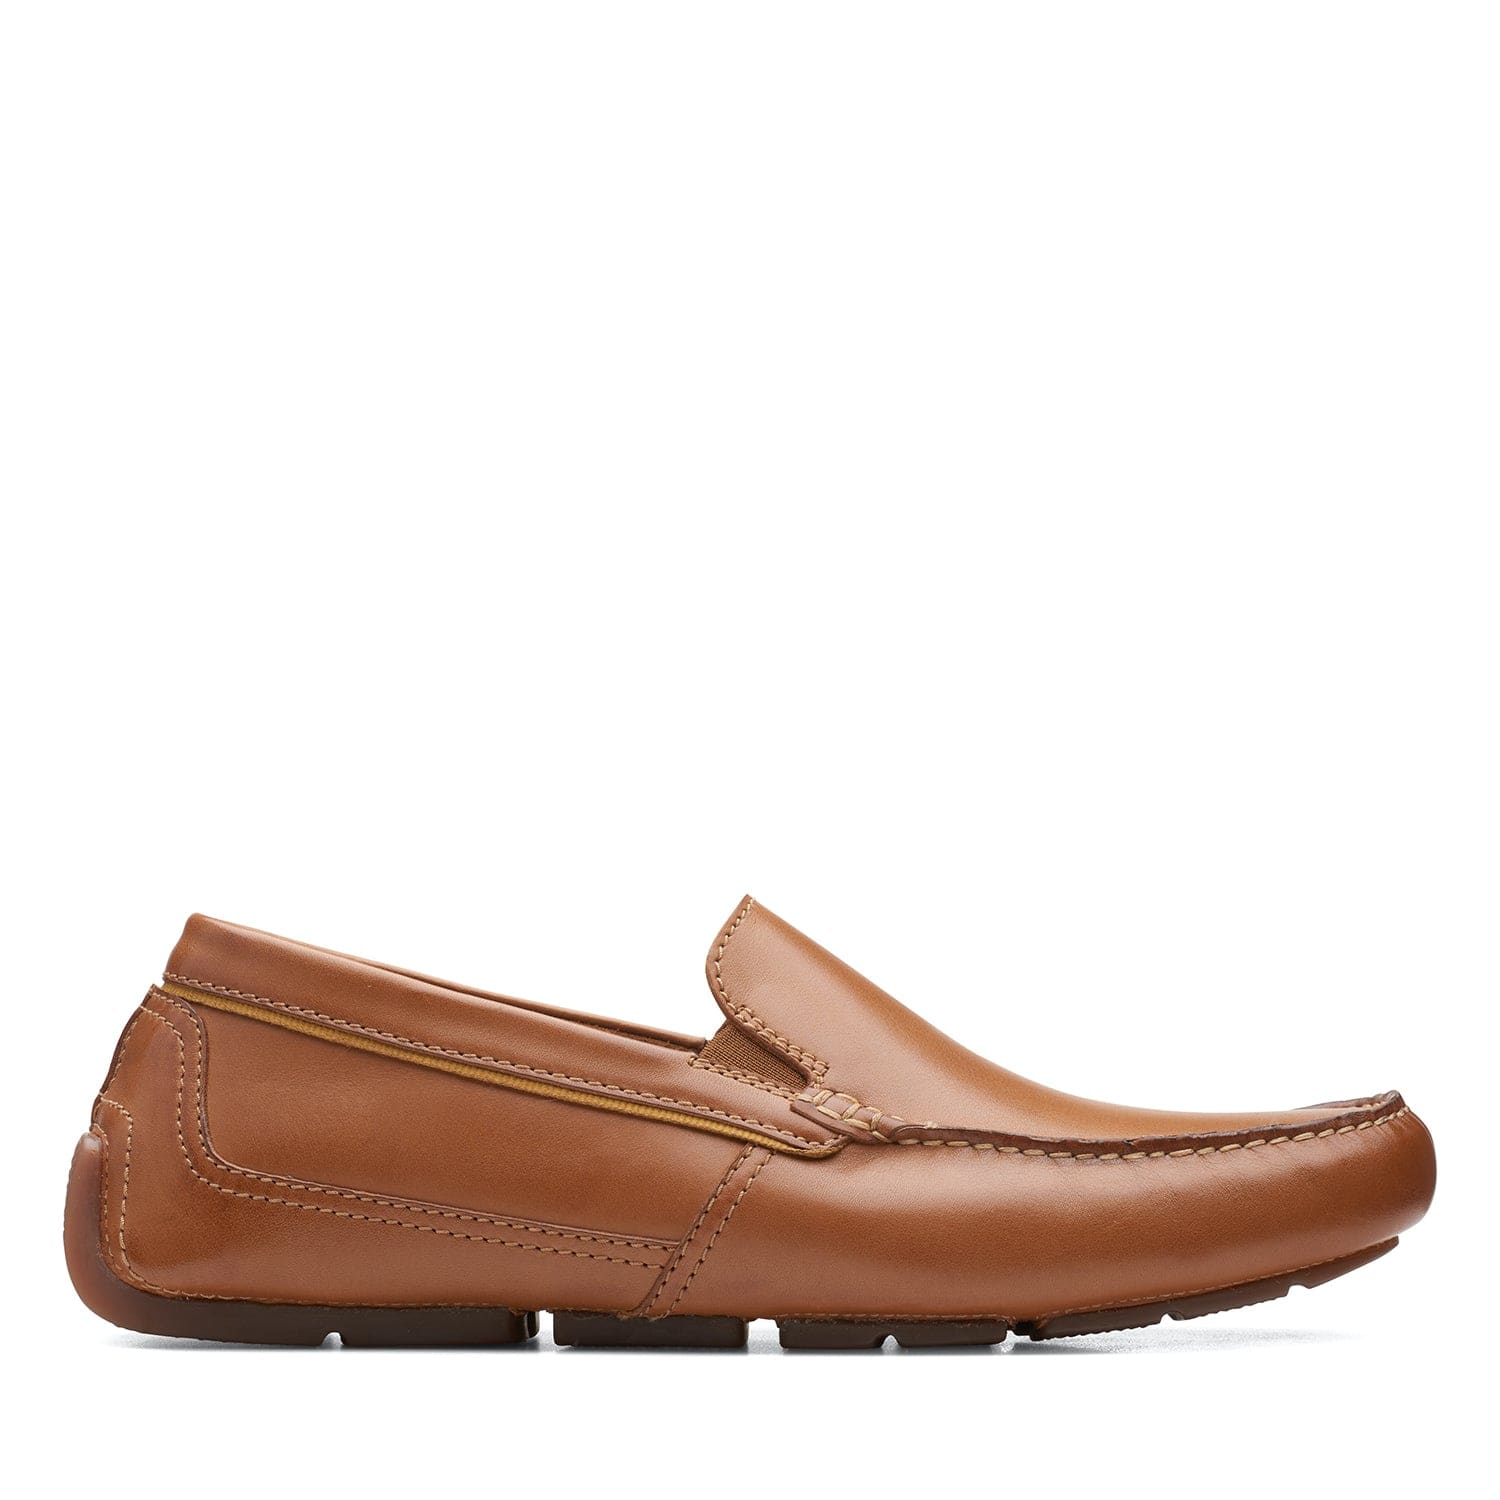 Clarks Markman Plain Shoes - Tan Leather - 261635447 - G Width (Standard Fit)